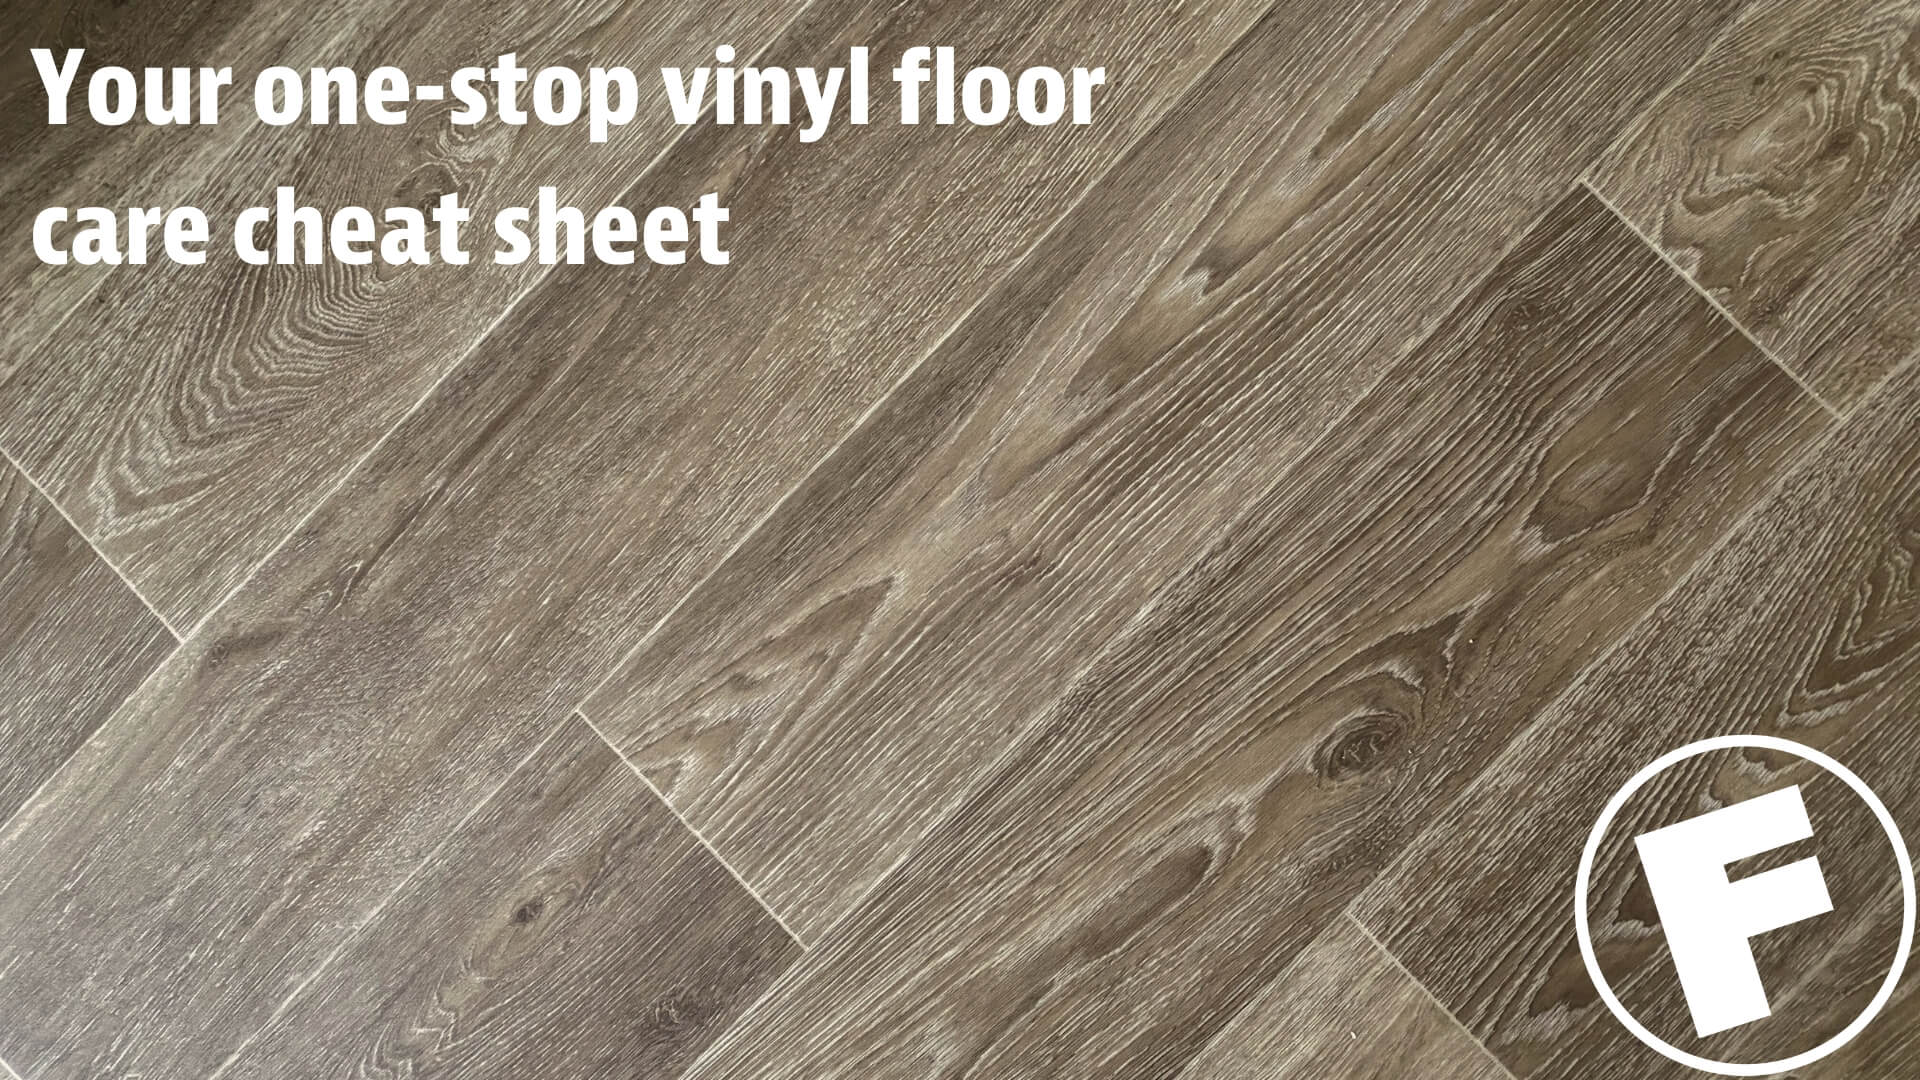 vinyl floor care cheat sheet